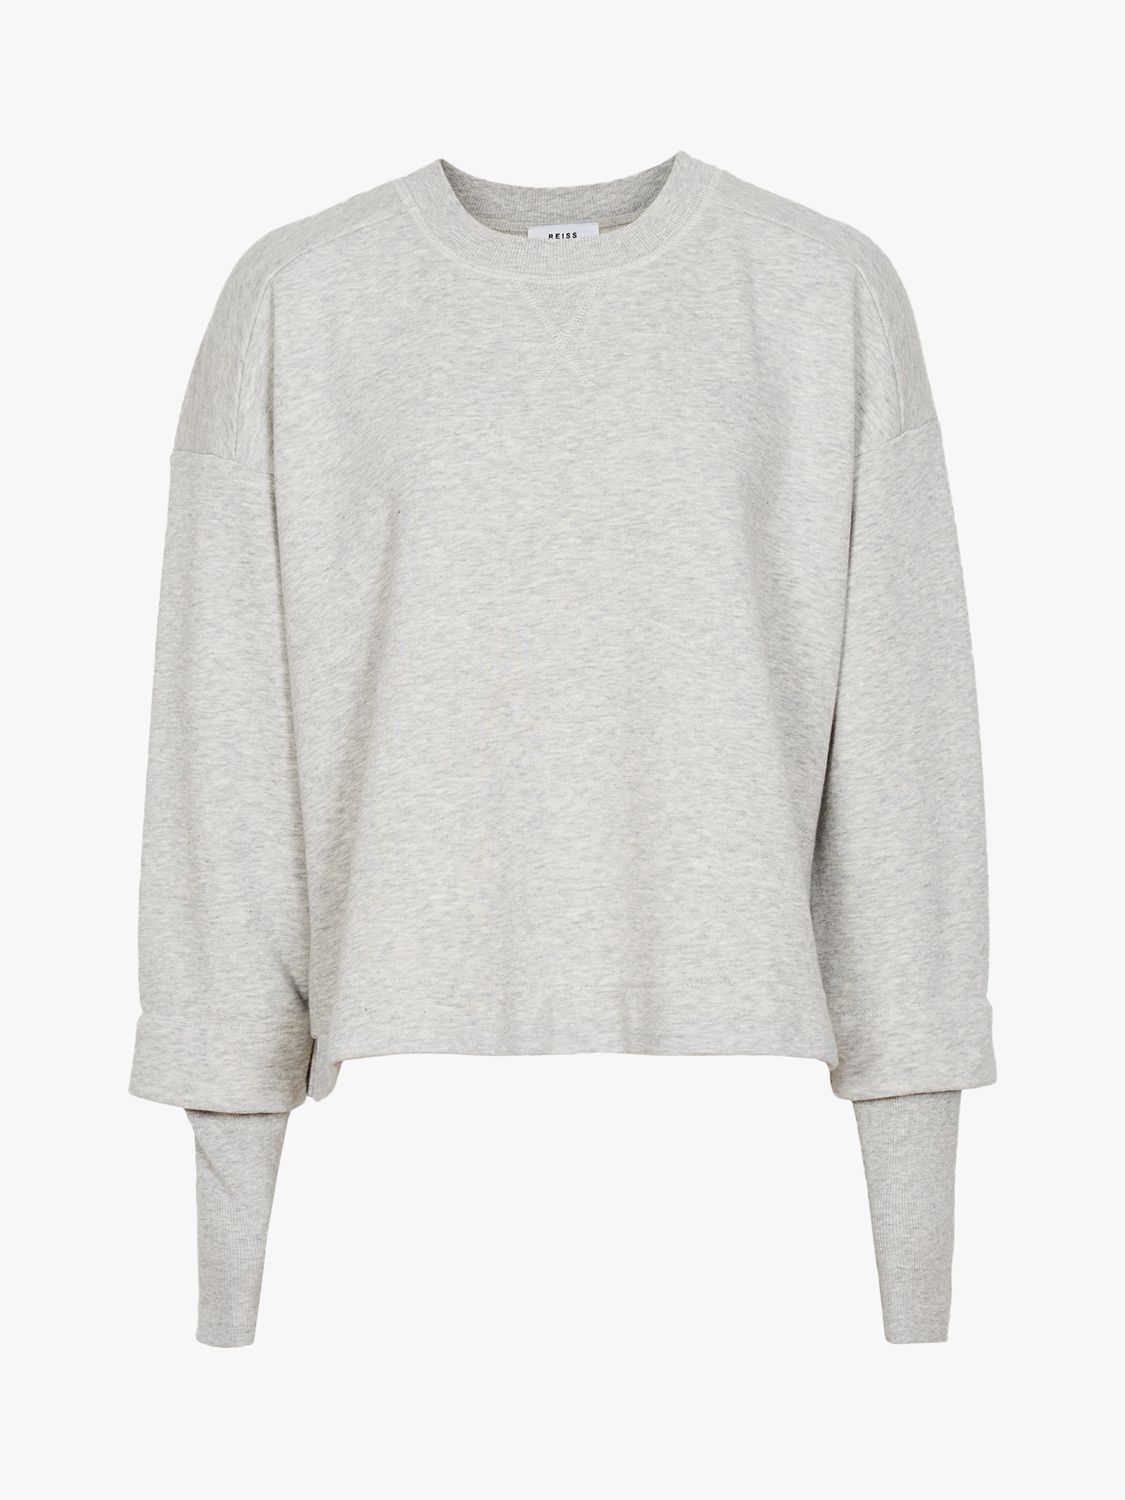 Reiss Abela Layered Sweatshirt, Grey, S